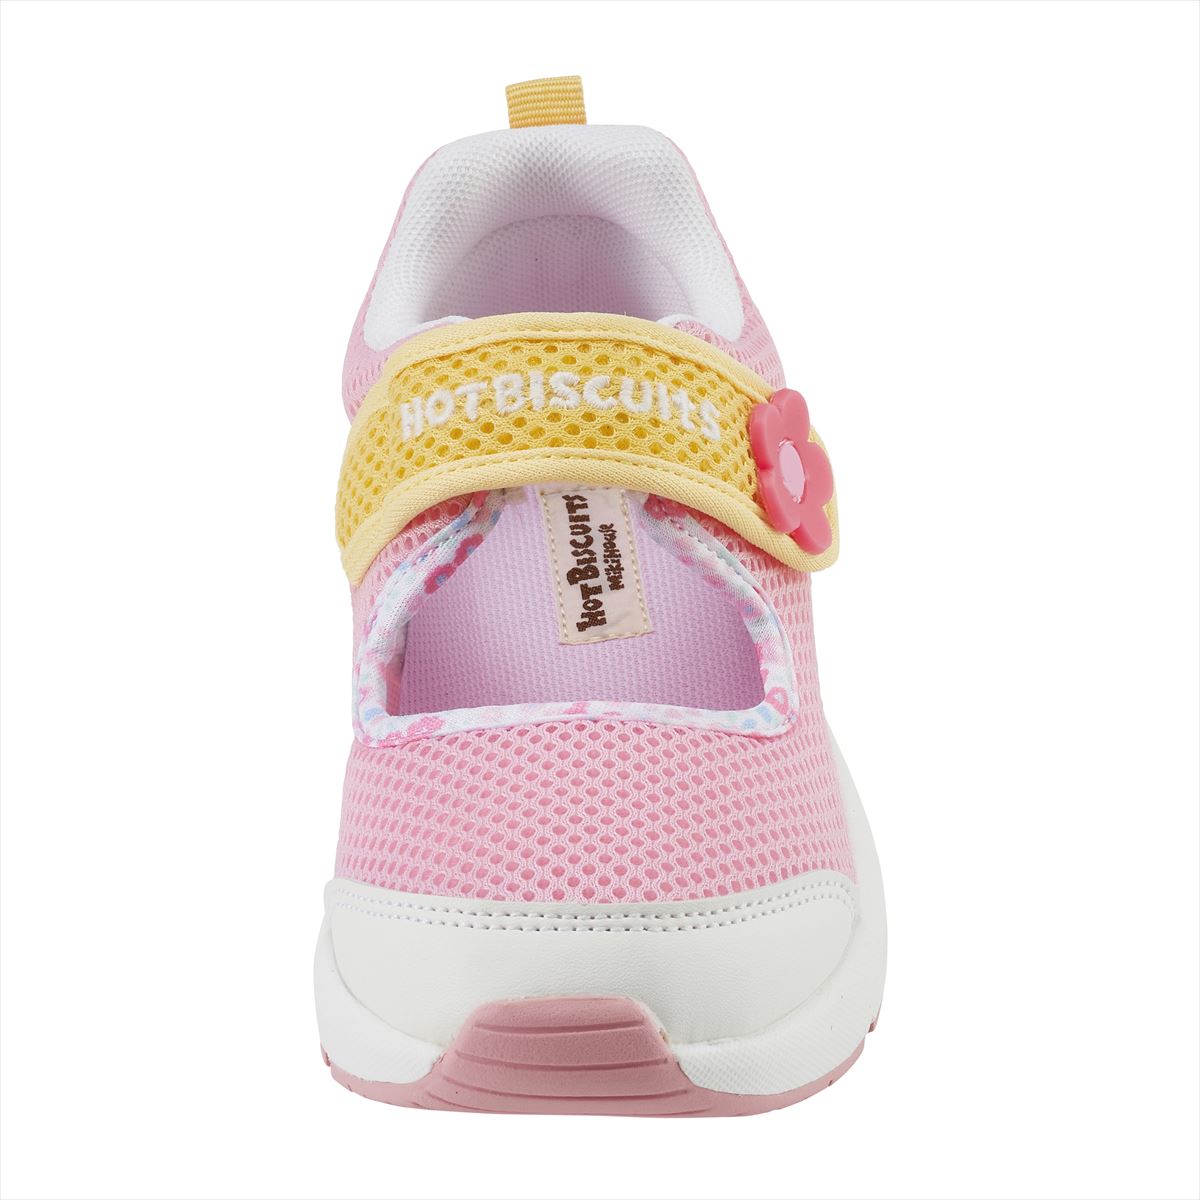 HB-Double Russell Mesh Sneakers for Kids - Sakura Steps